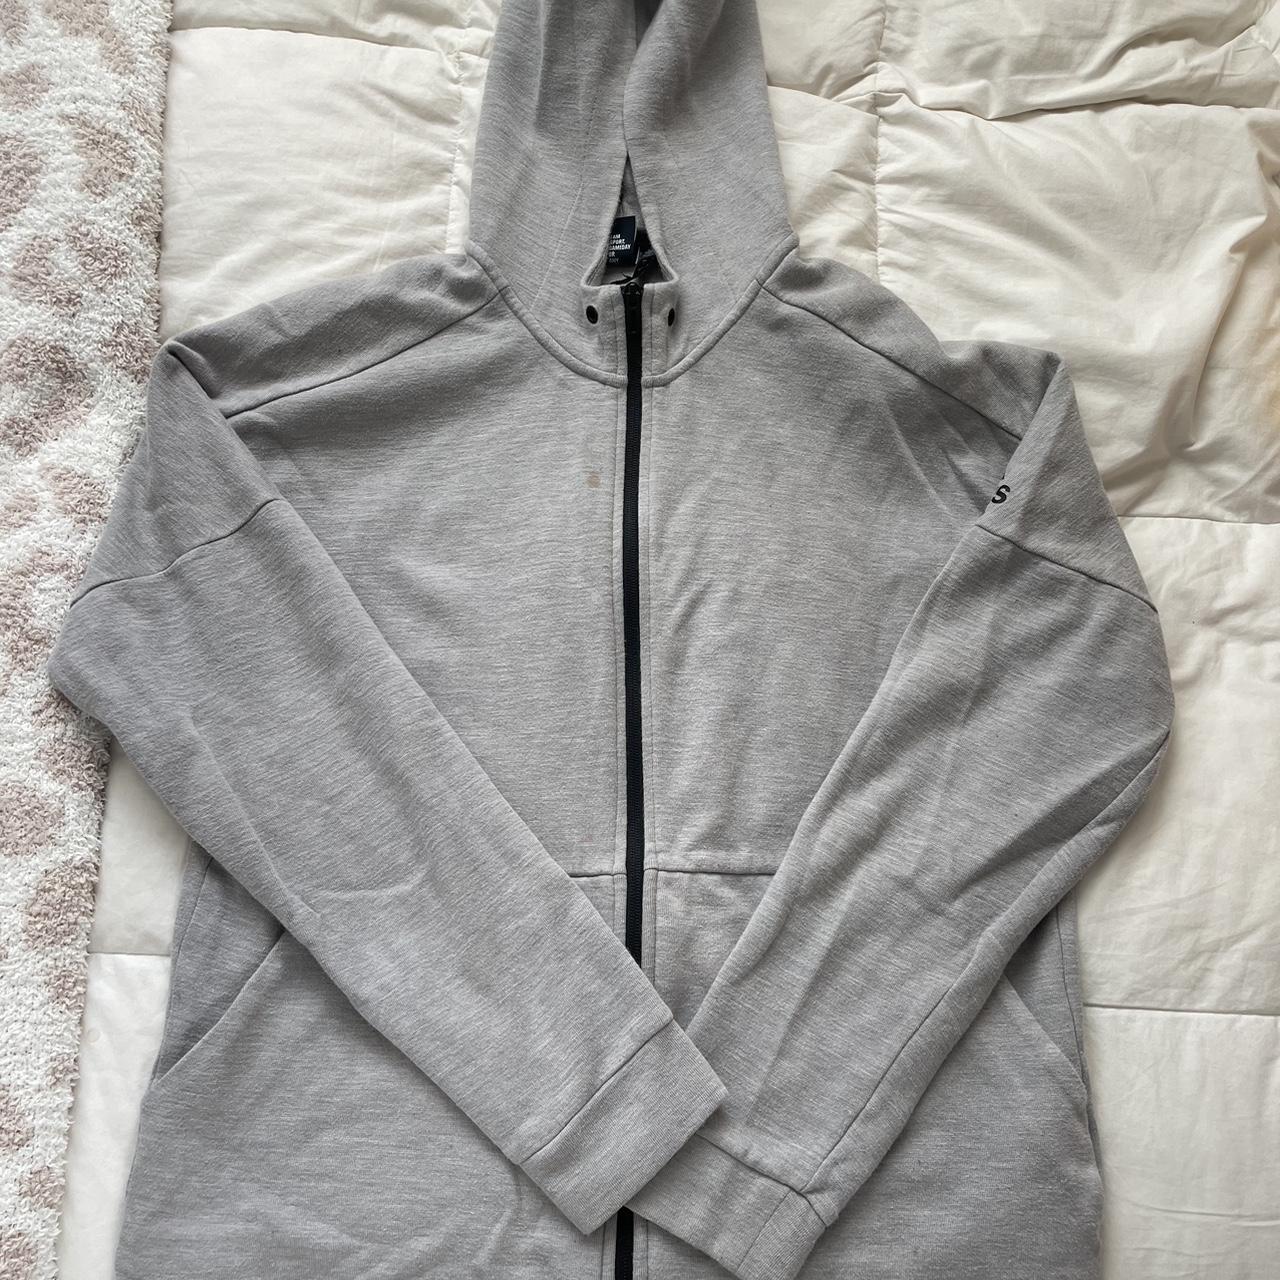 Adidas Men's Grey Sweatshirt